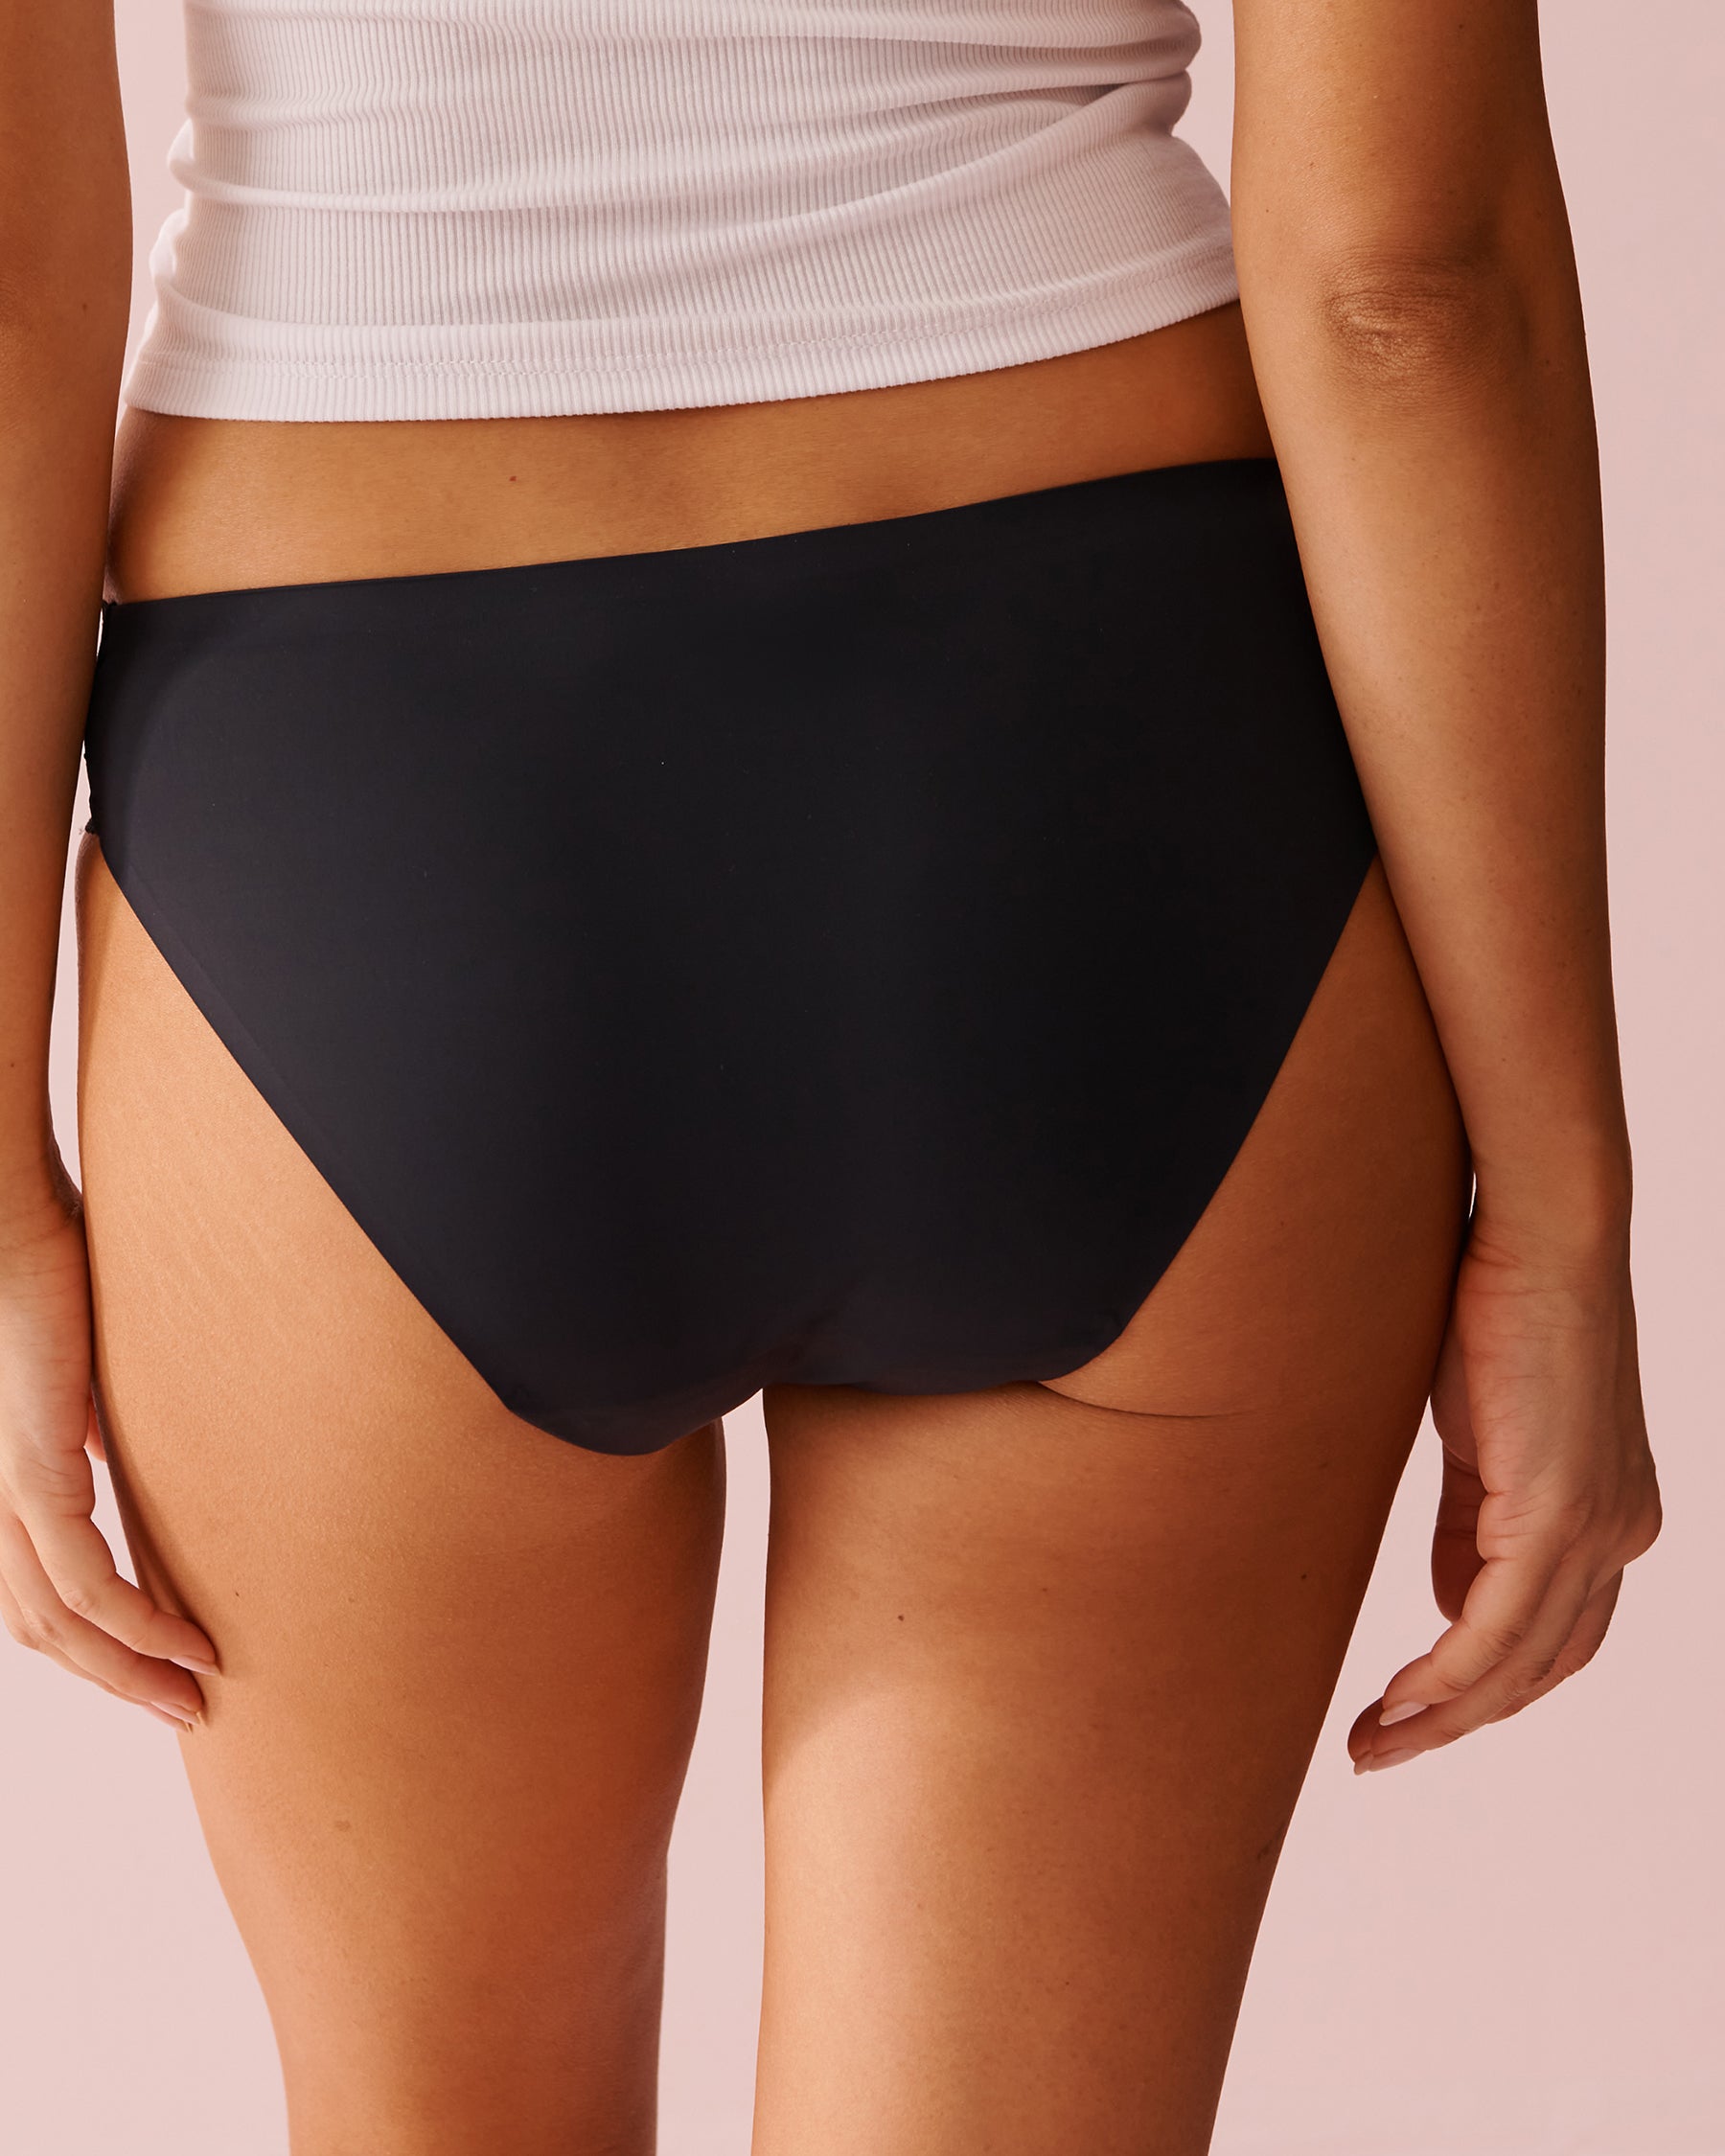 Back of the black bikini period panty – NEWEX